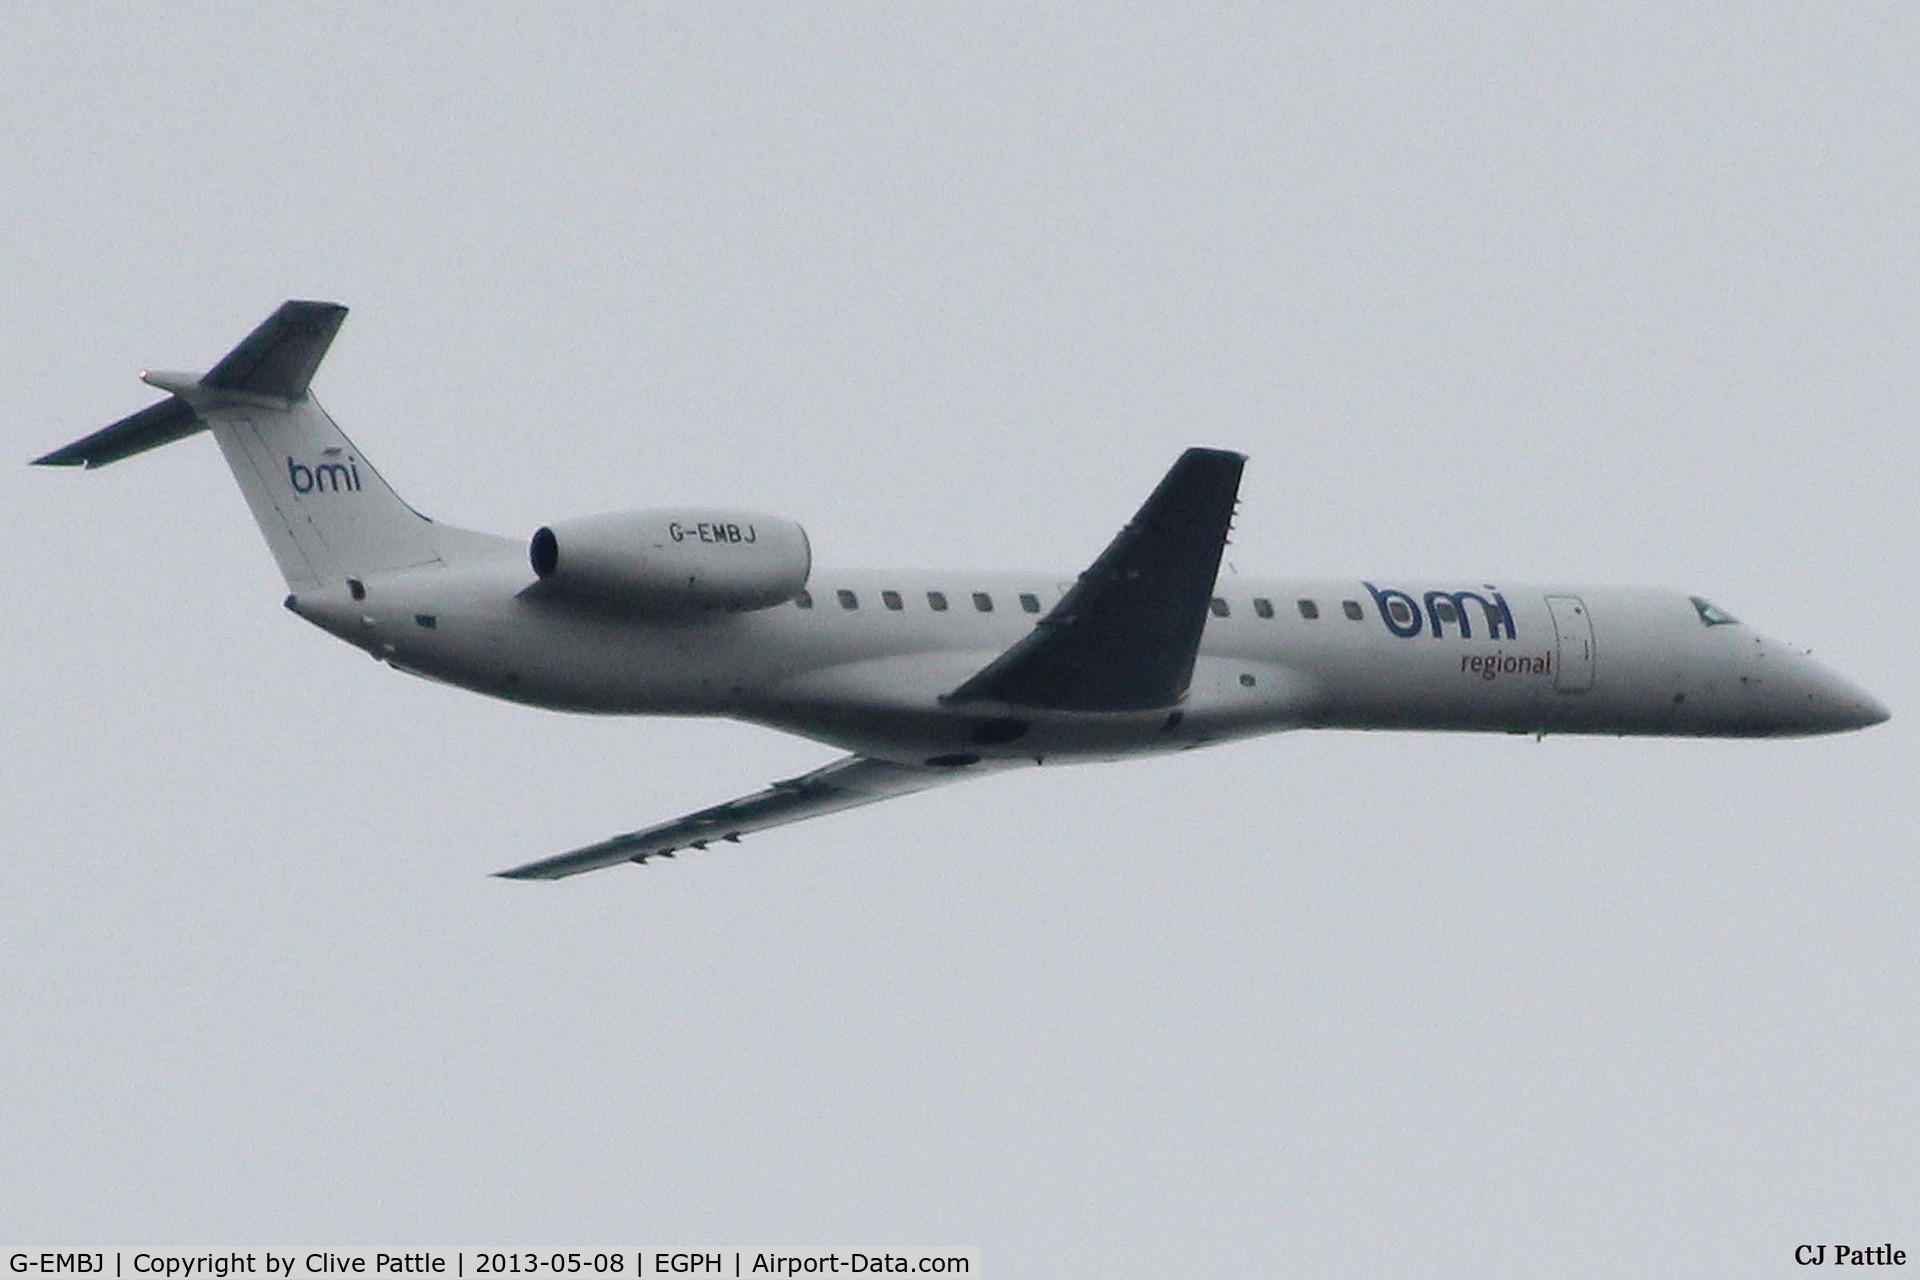 G-EMBJ, 1999 Embraer ERJ-145EU (EMB-145EU) C/N 145134, Take off with minimal markings